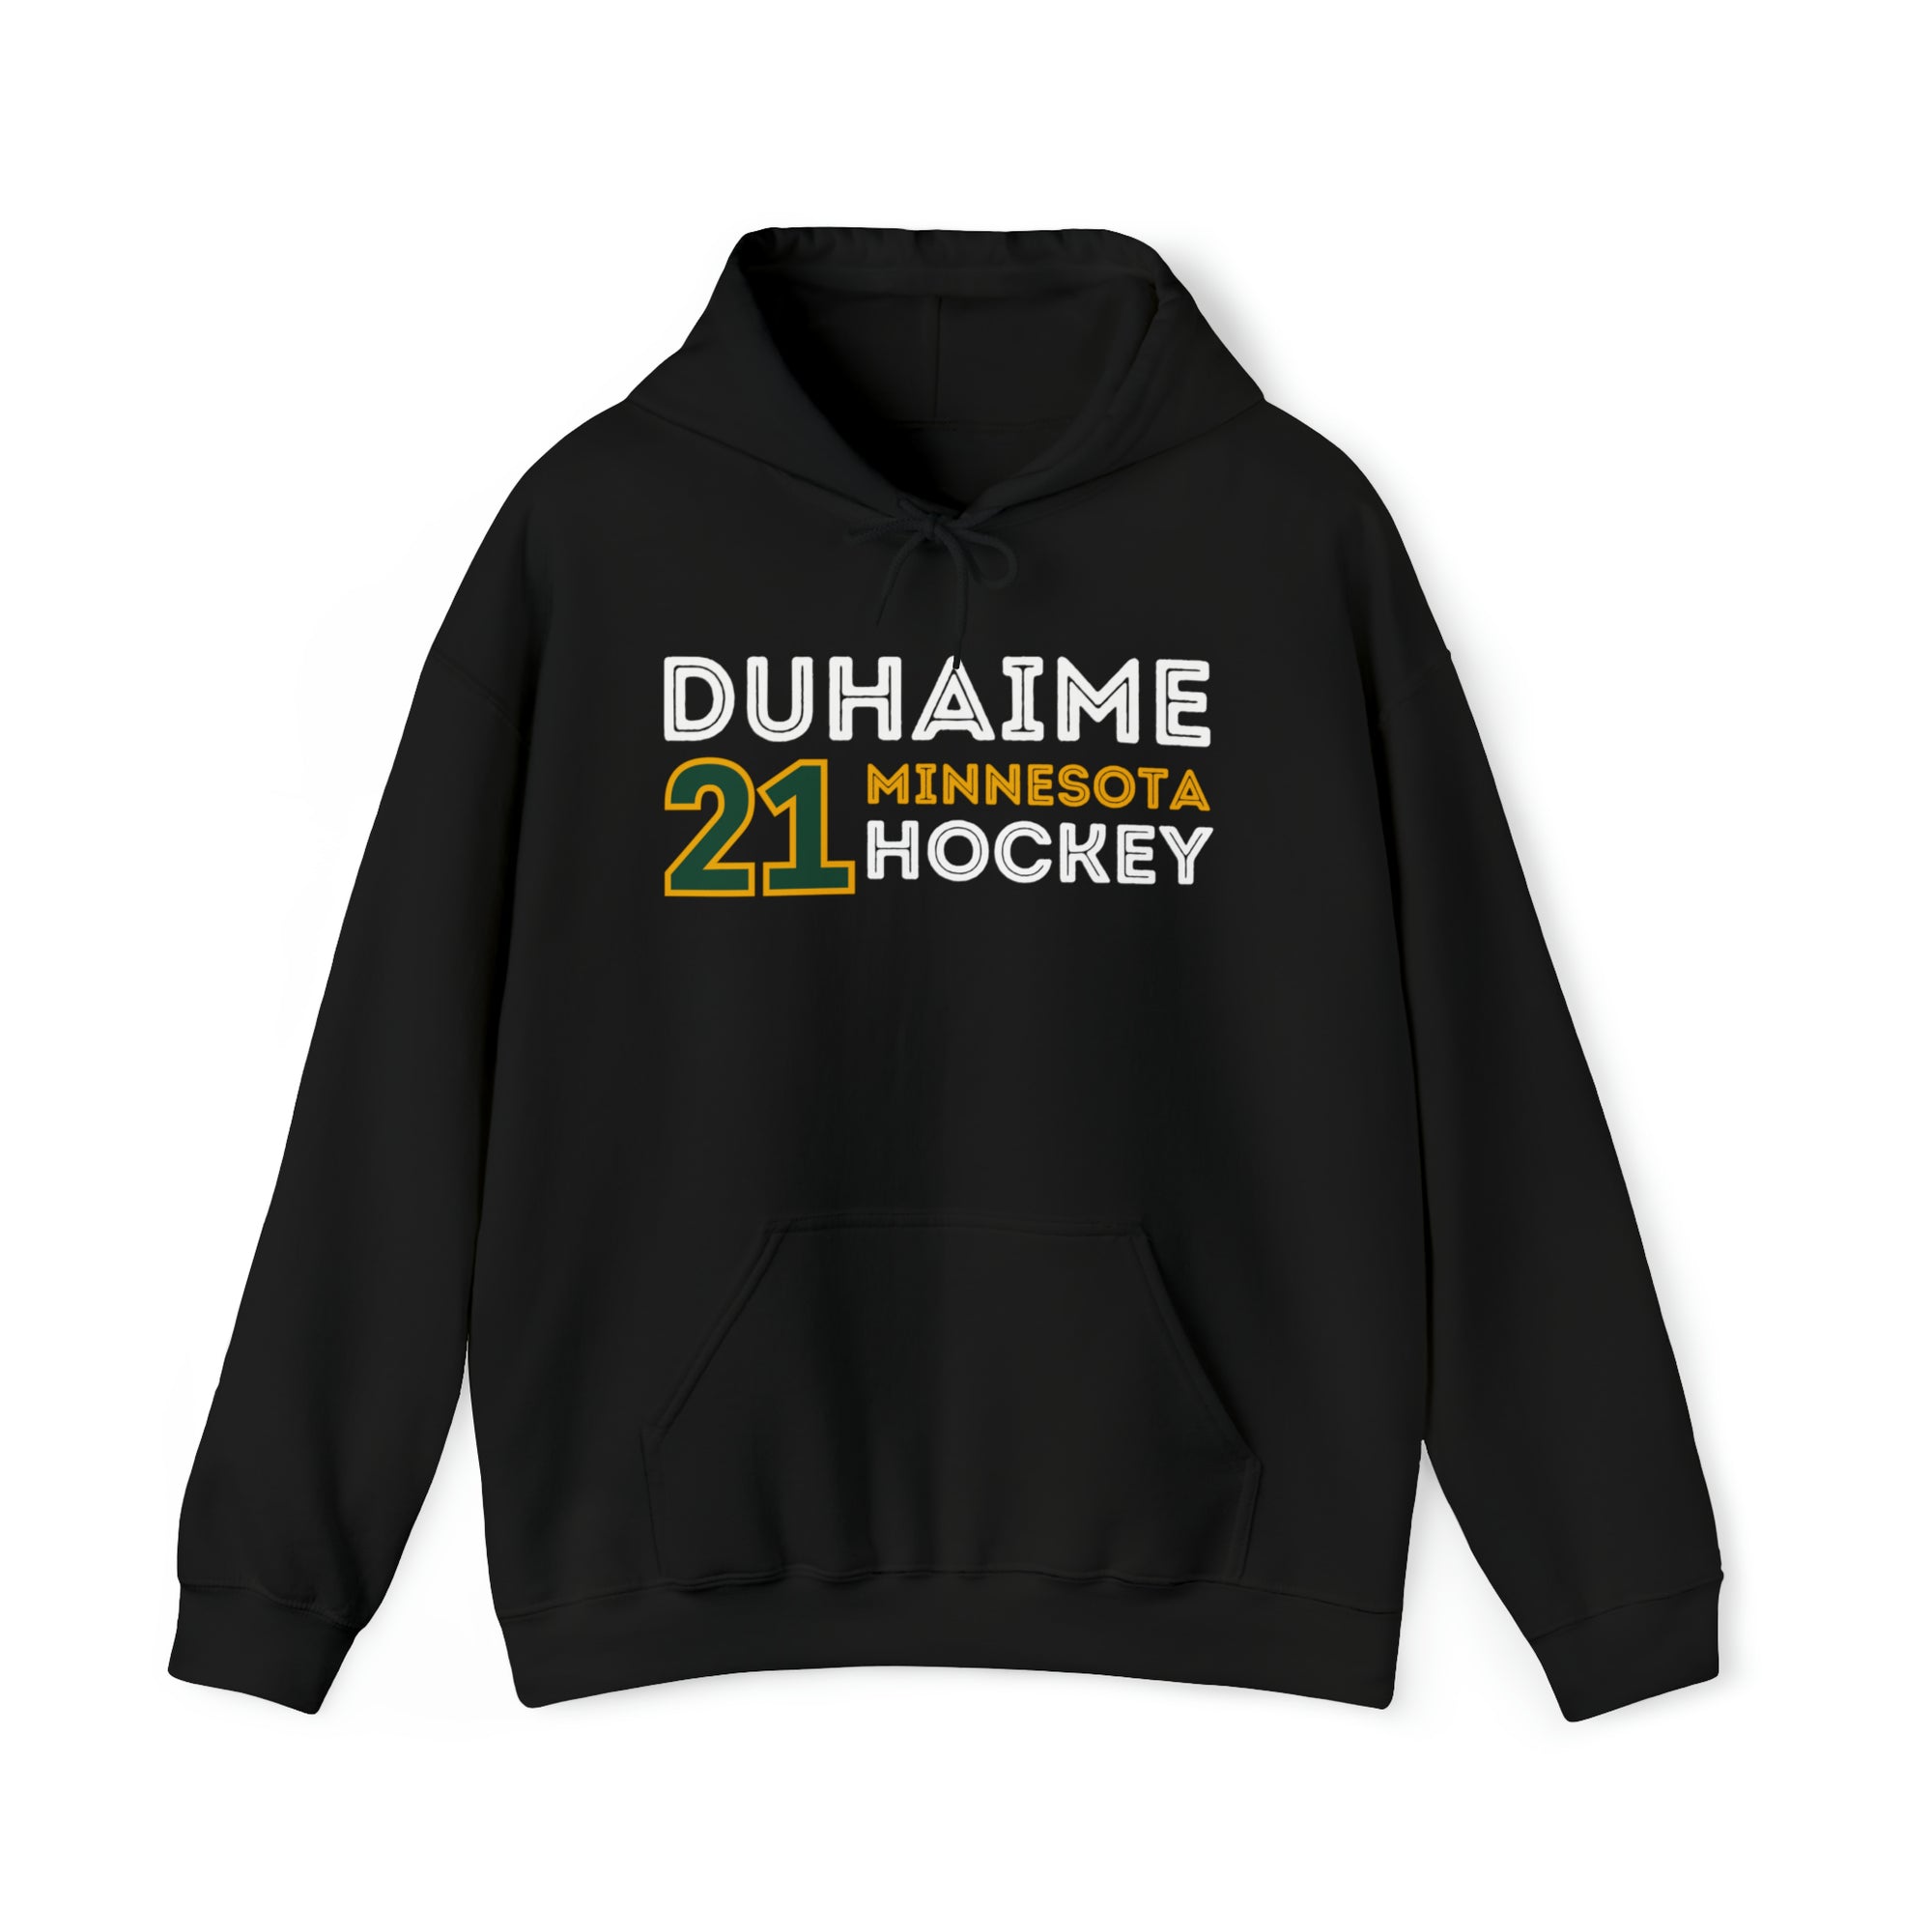 Duhaime 21 Minnesota Hockey Grafitti Wall Design Unisex Hooded Sweatshirt